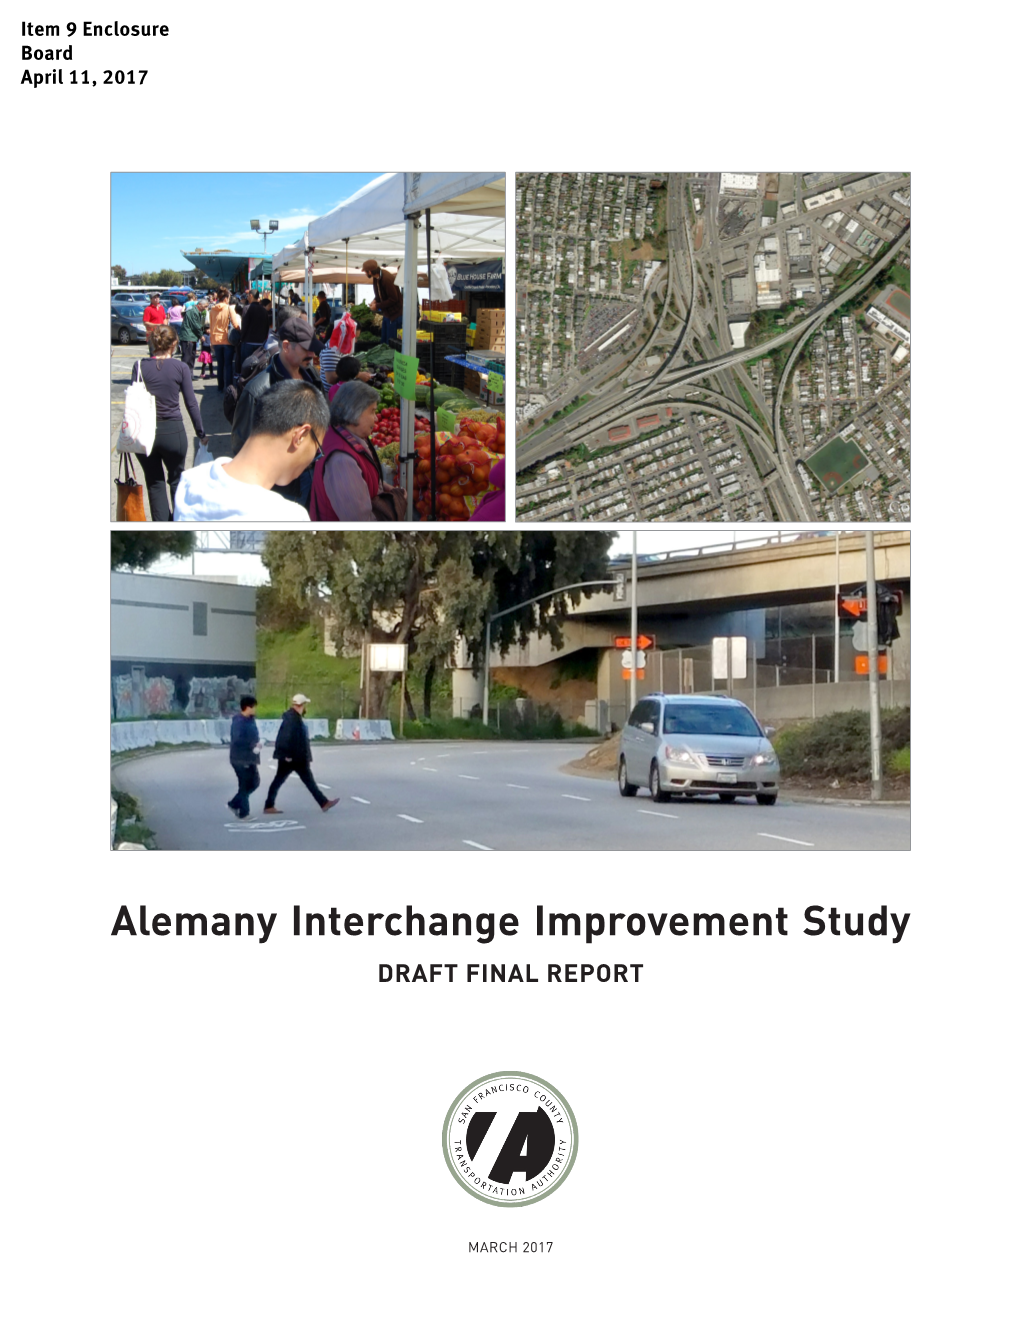 Alemany Interchange Improvement Study DRAFT FINAL REPORT